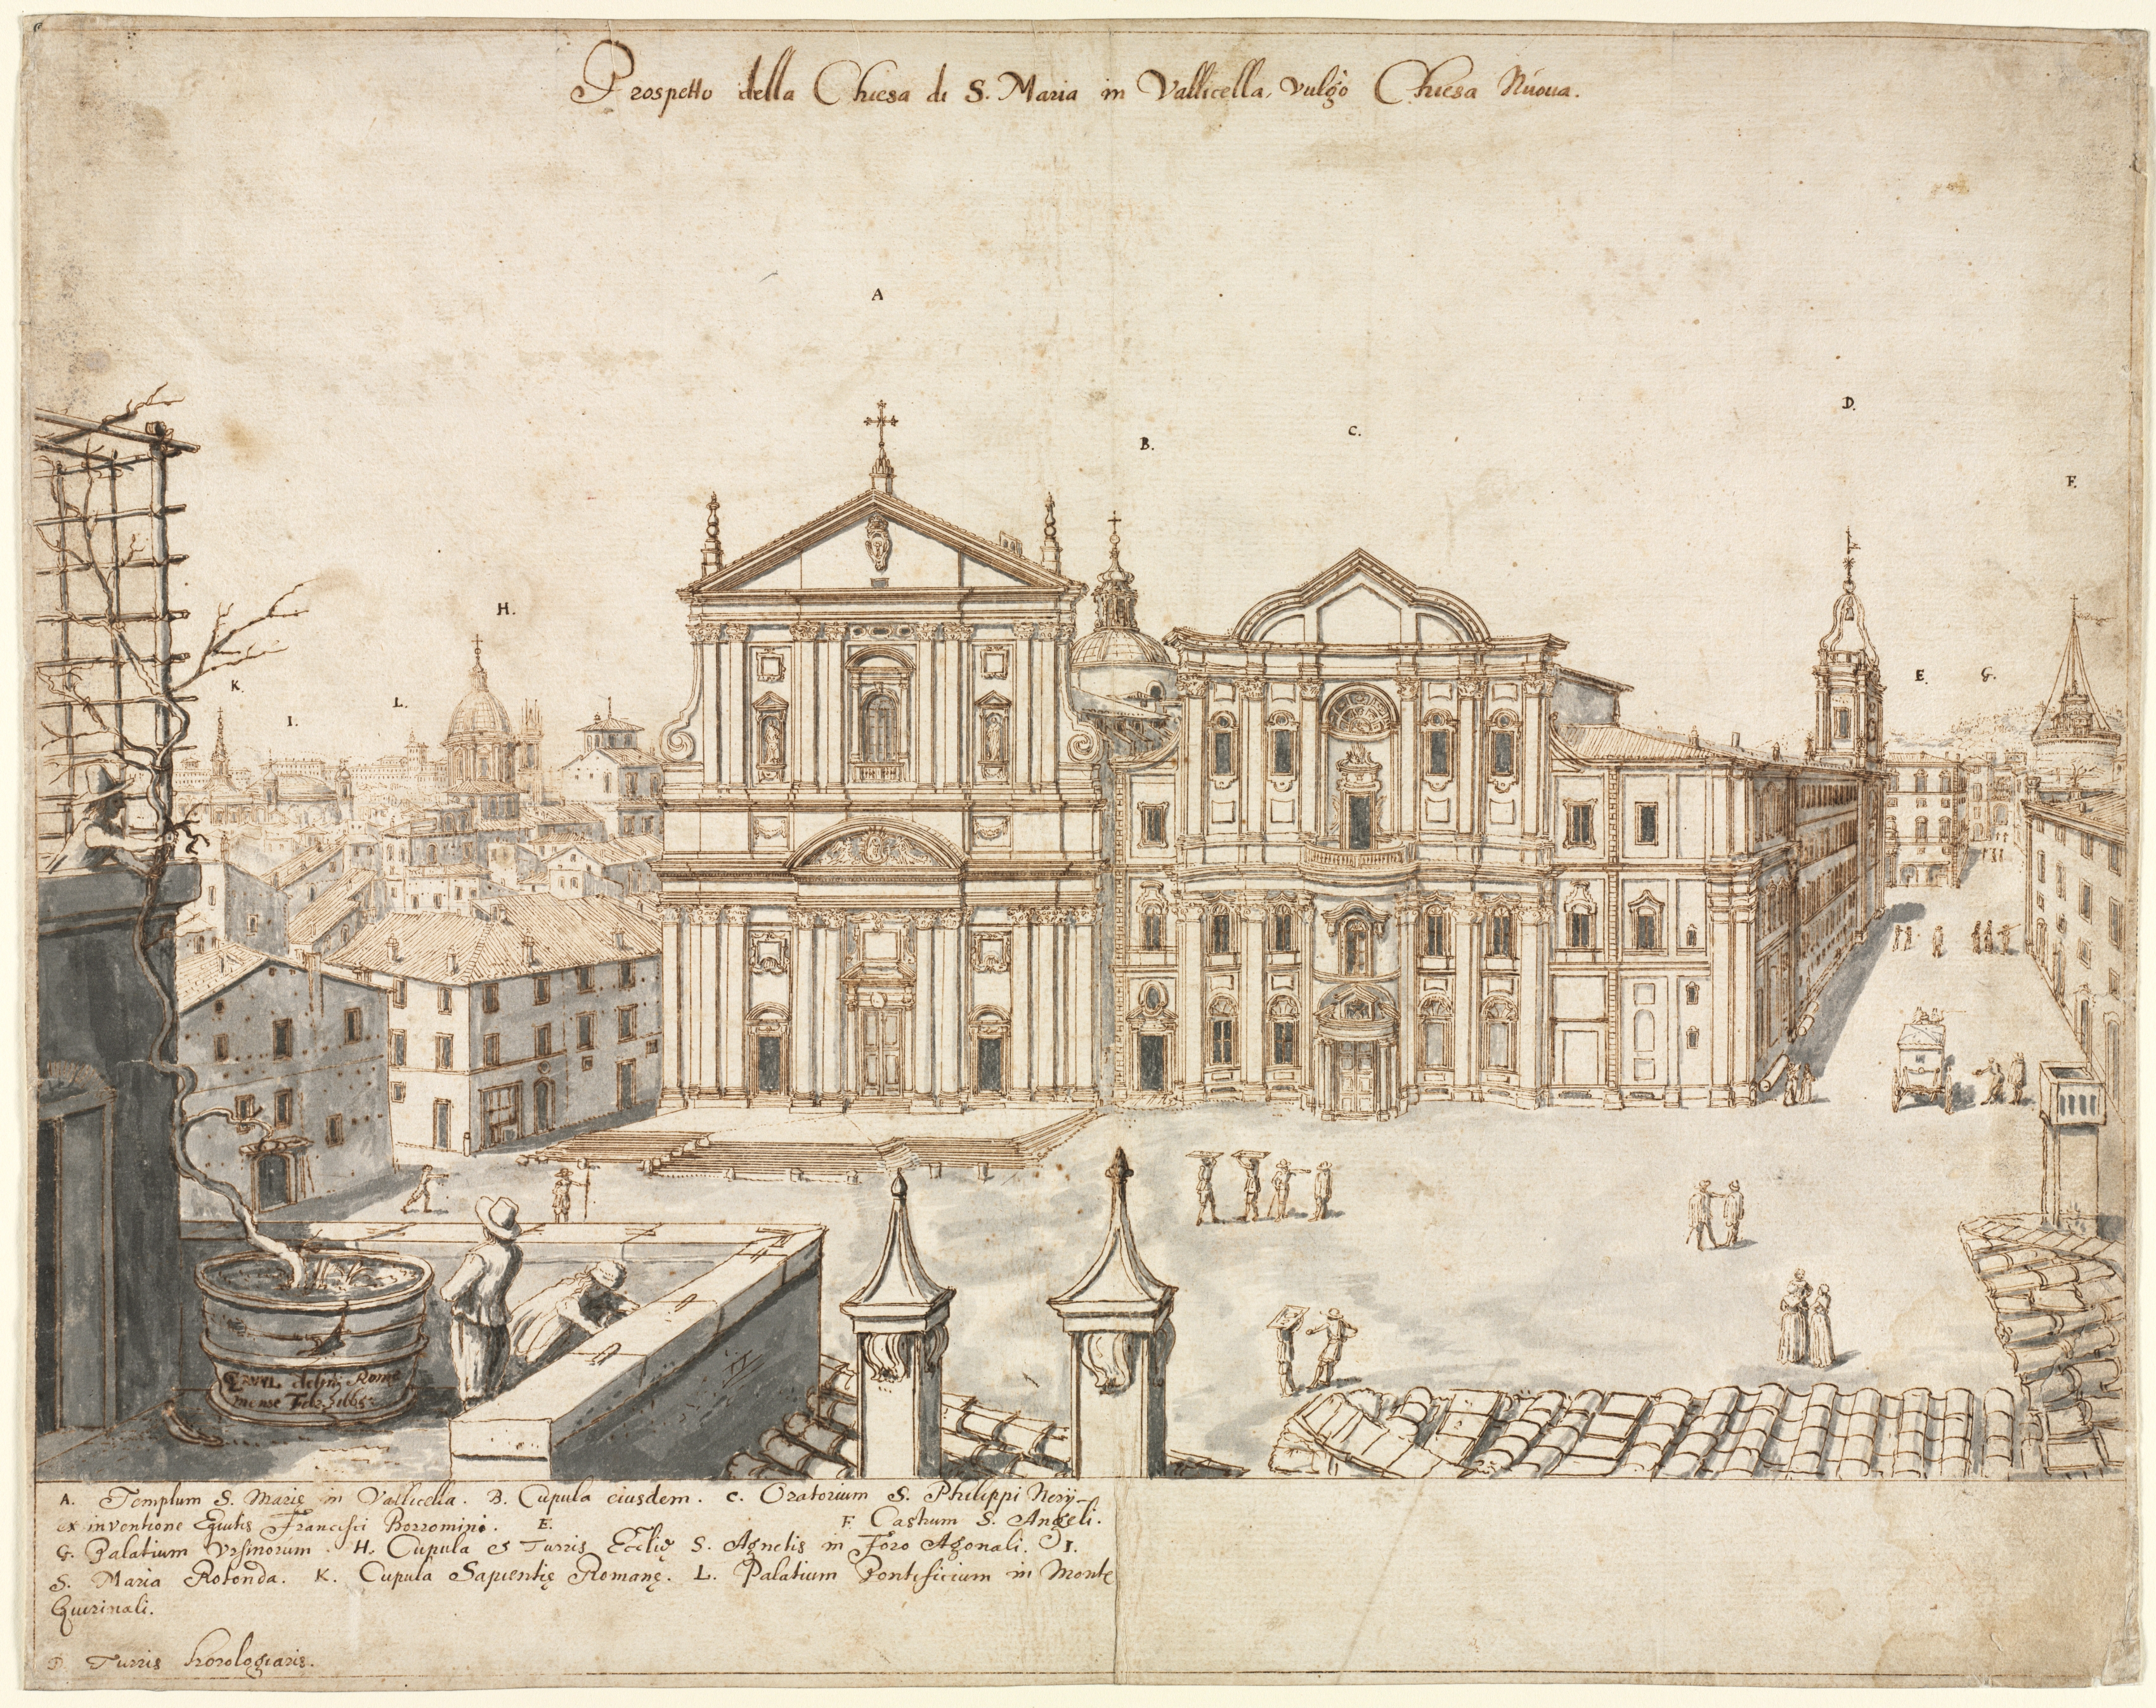 Eighteen Views of Rome: The Church of Santa Maria in Vallicella